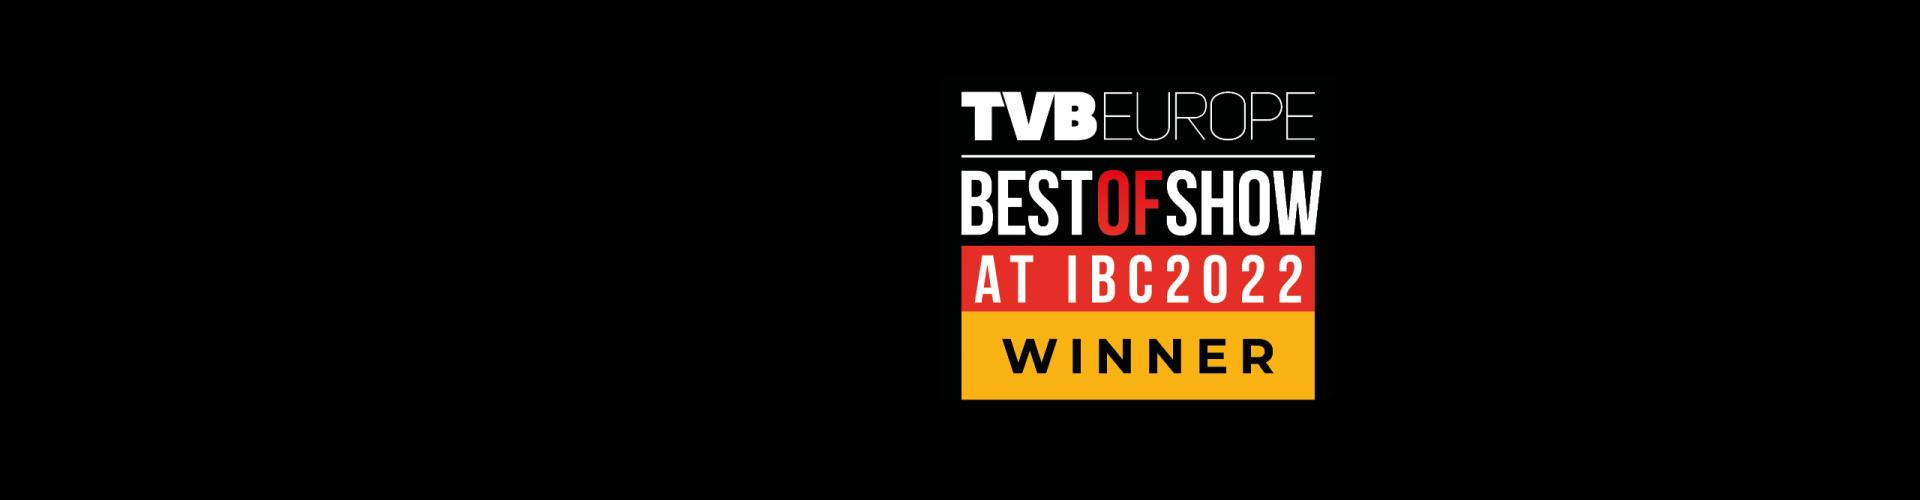 TVB Europe best of show award IBC 2022